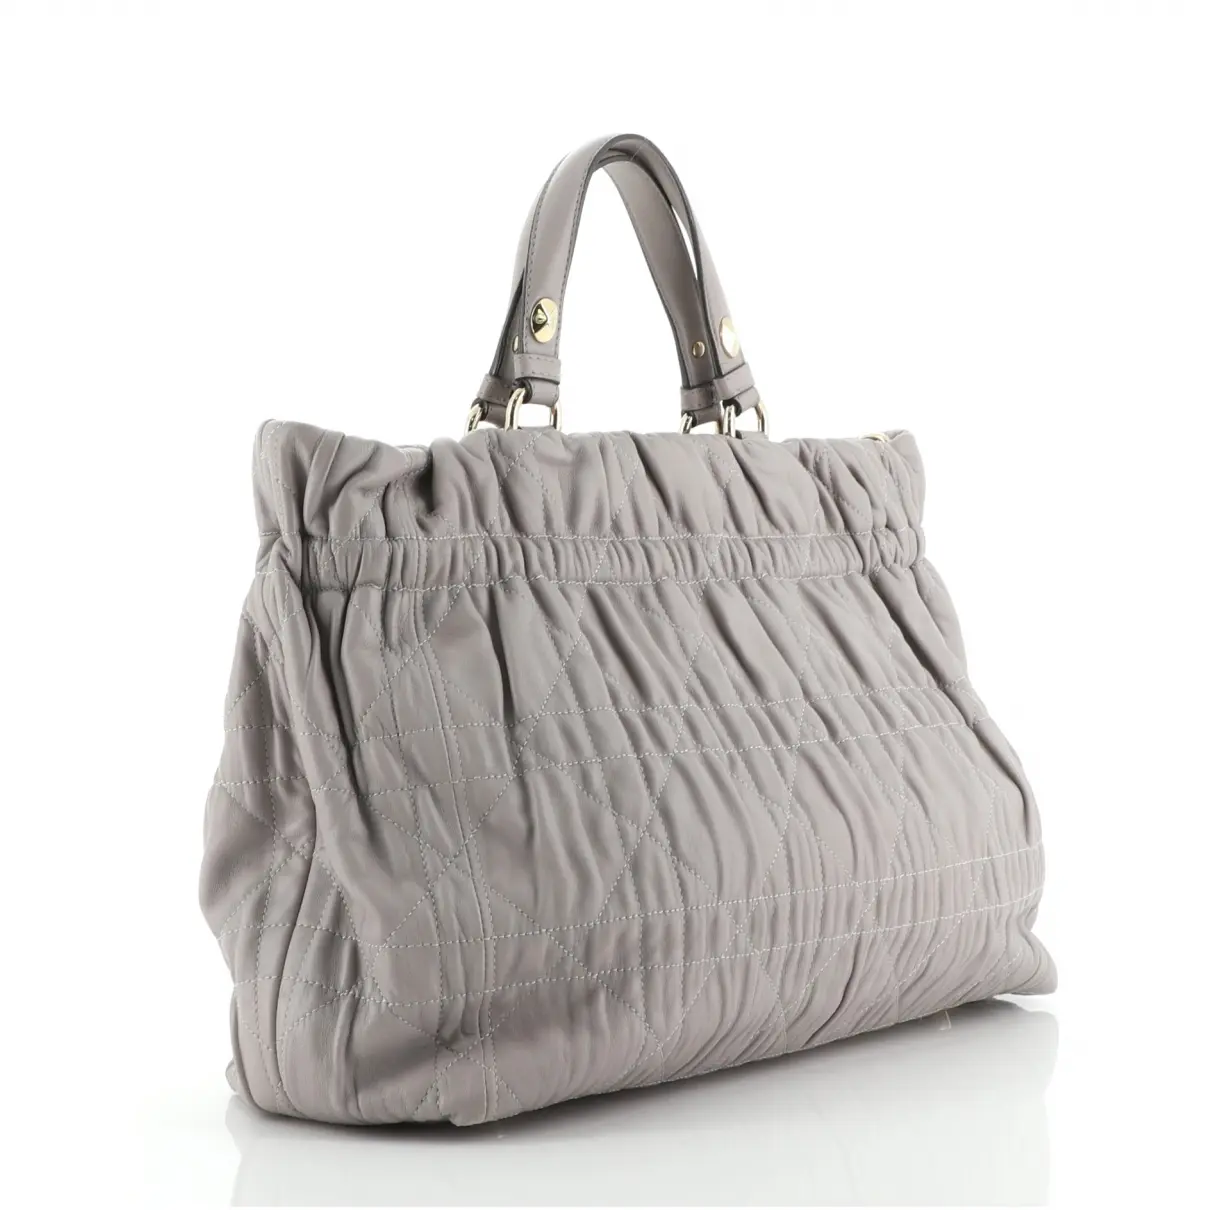 Luxury Christian Dior Handbags Women